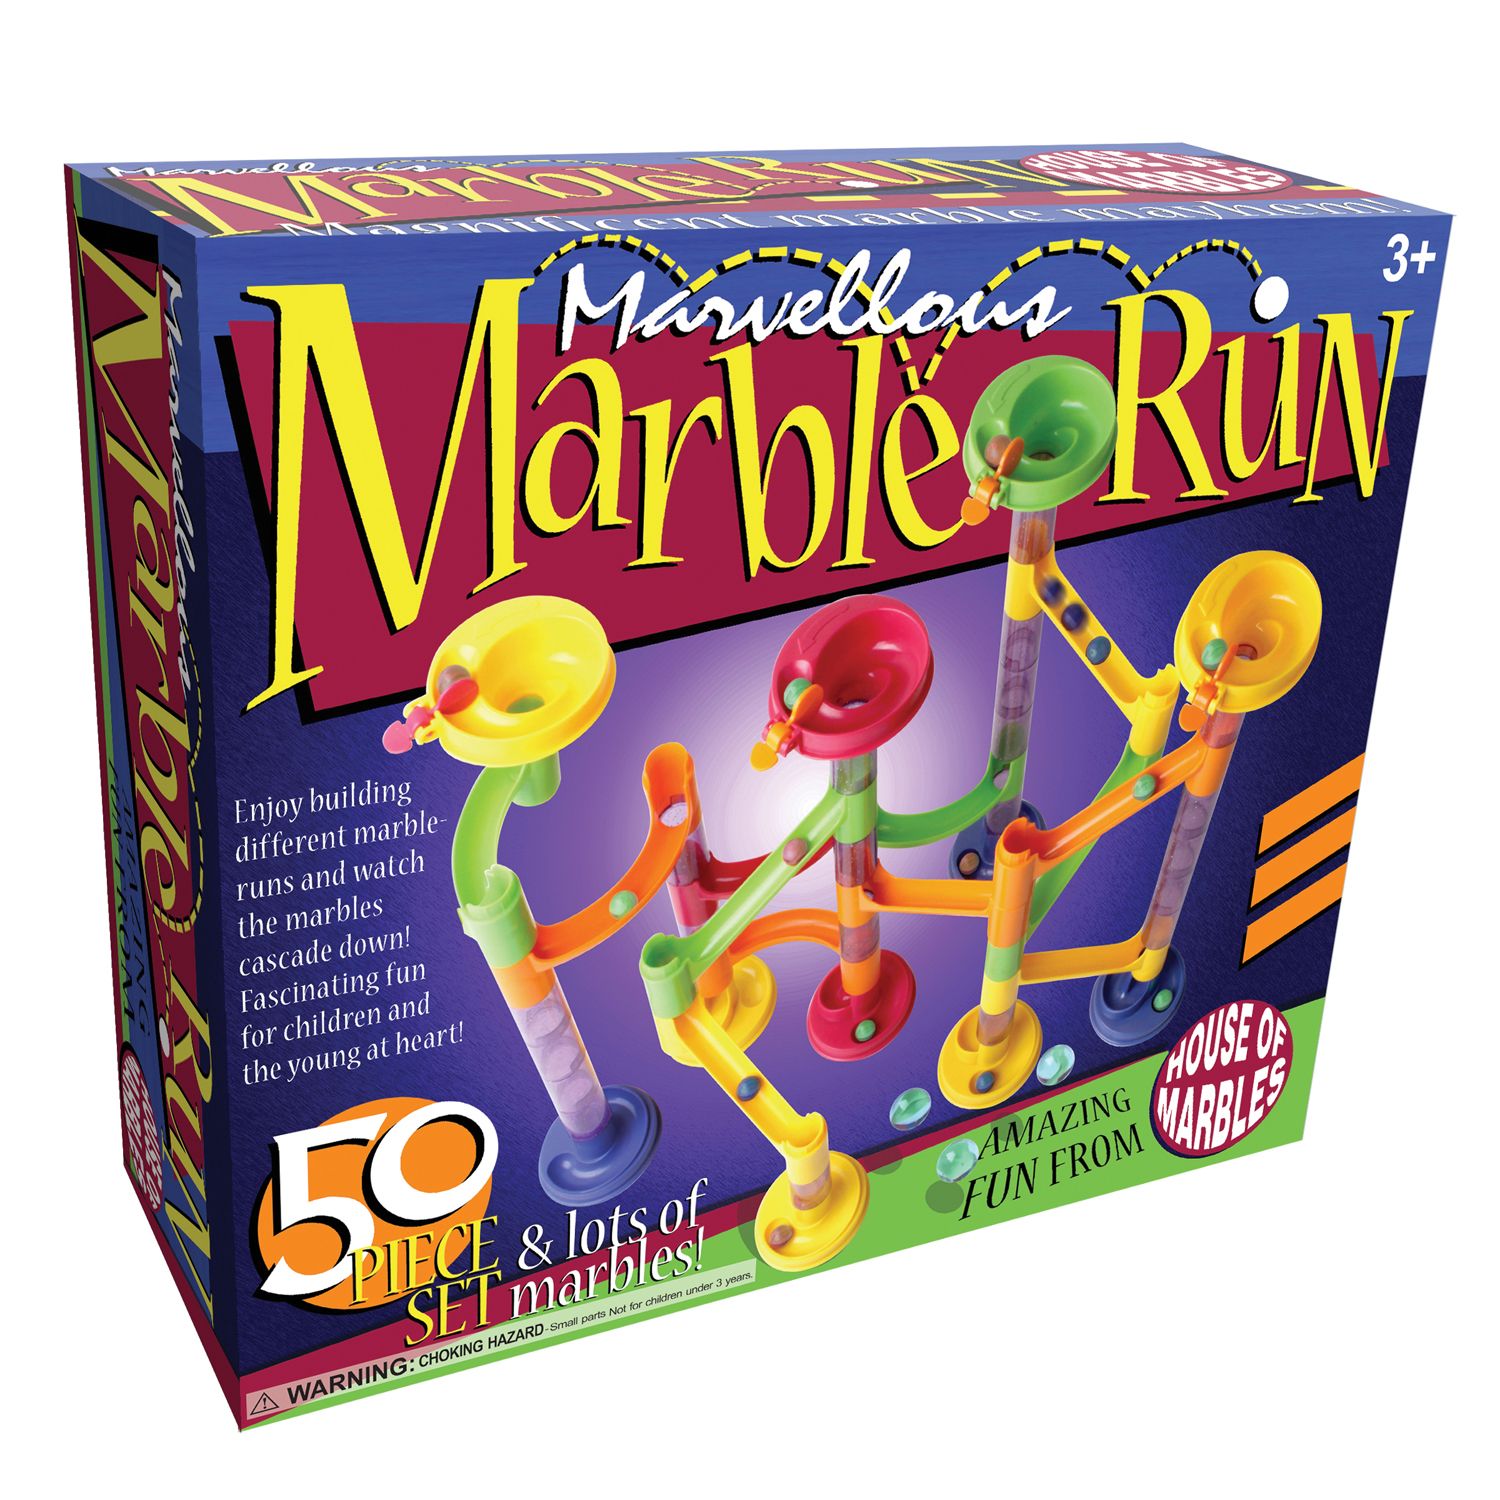 34 Unique Marble Games for Kids